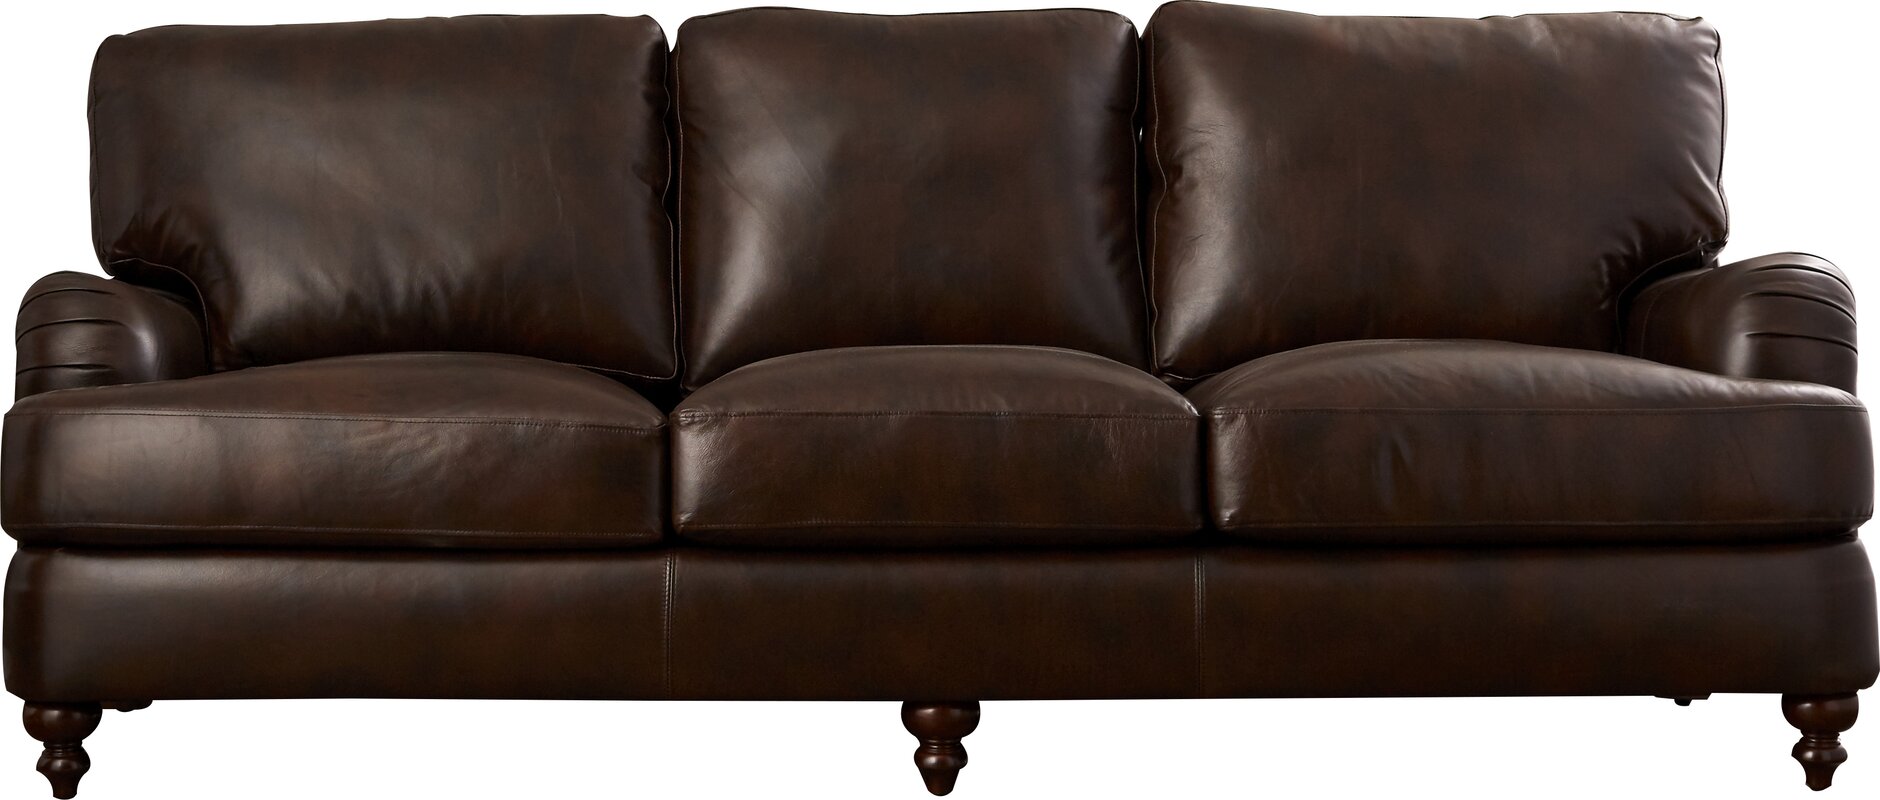 charles classic oversized leather sofa